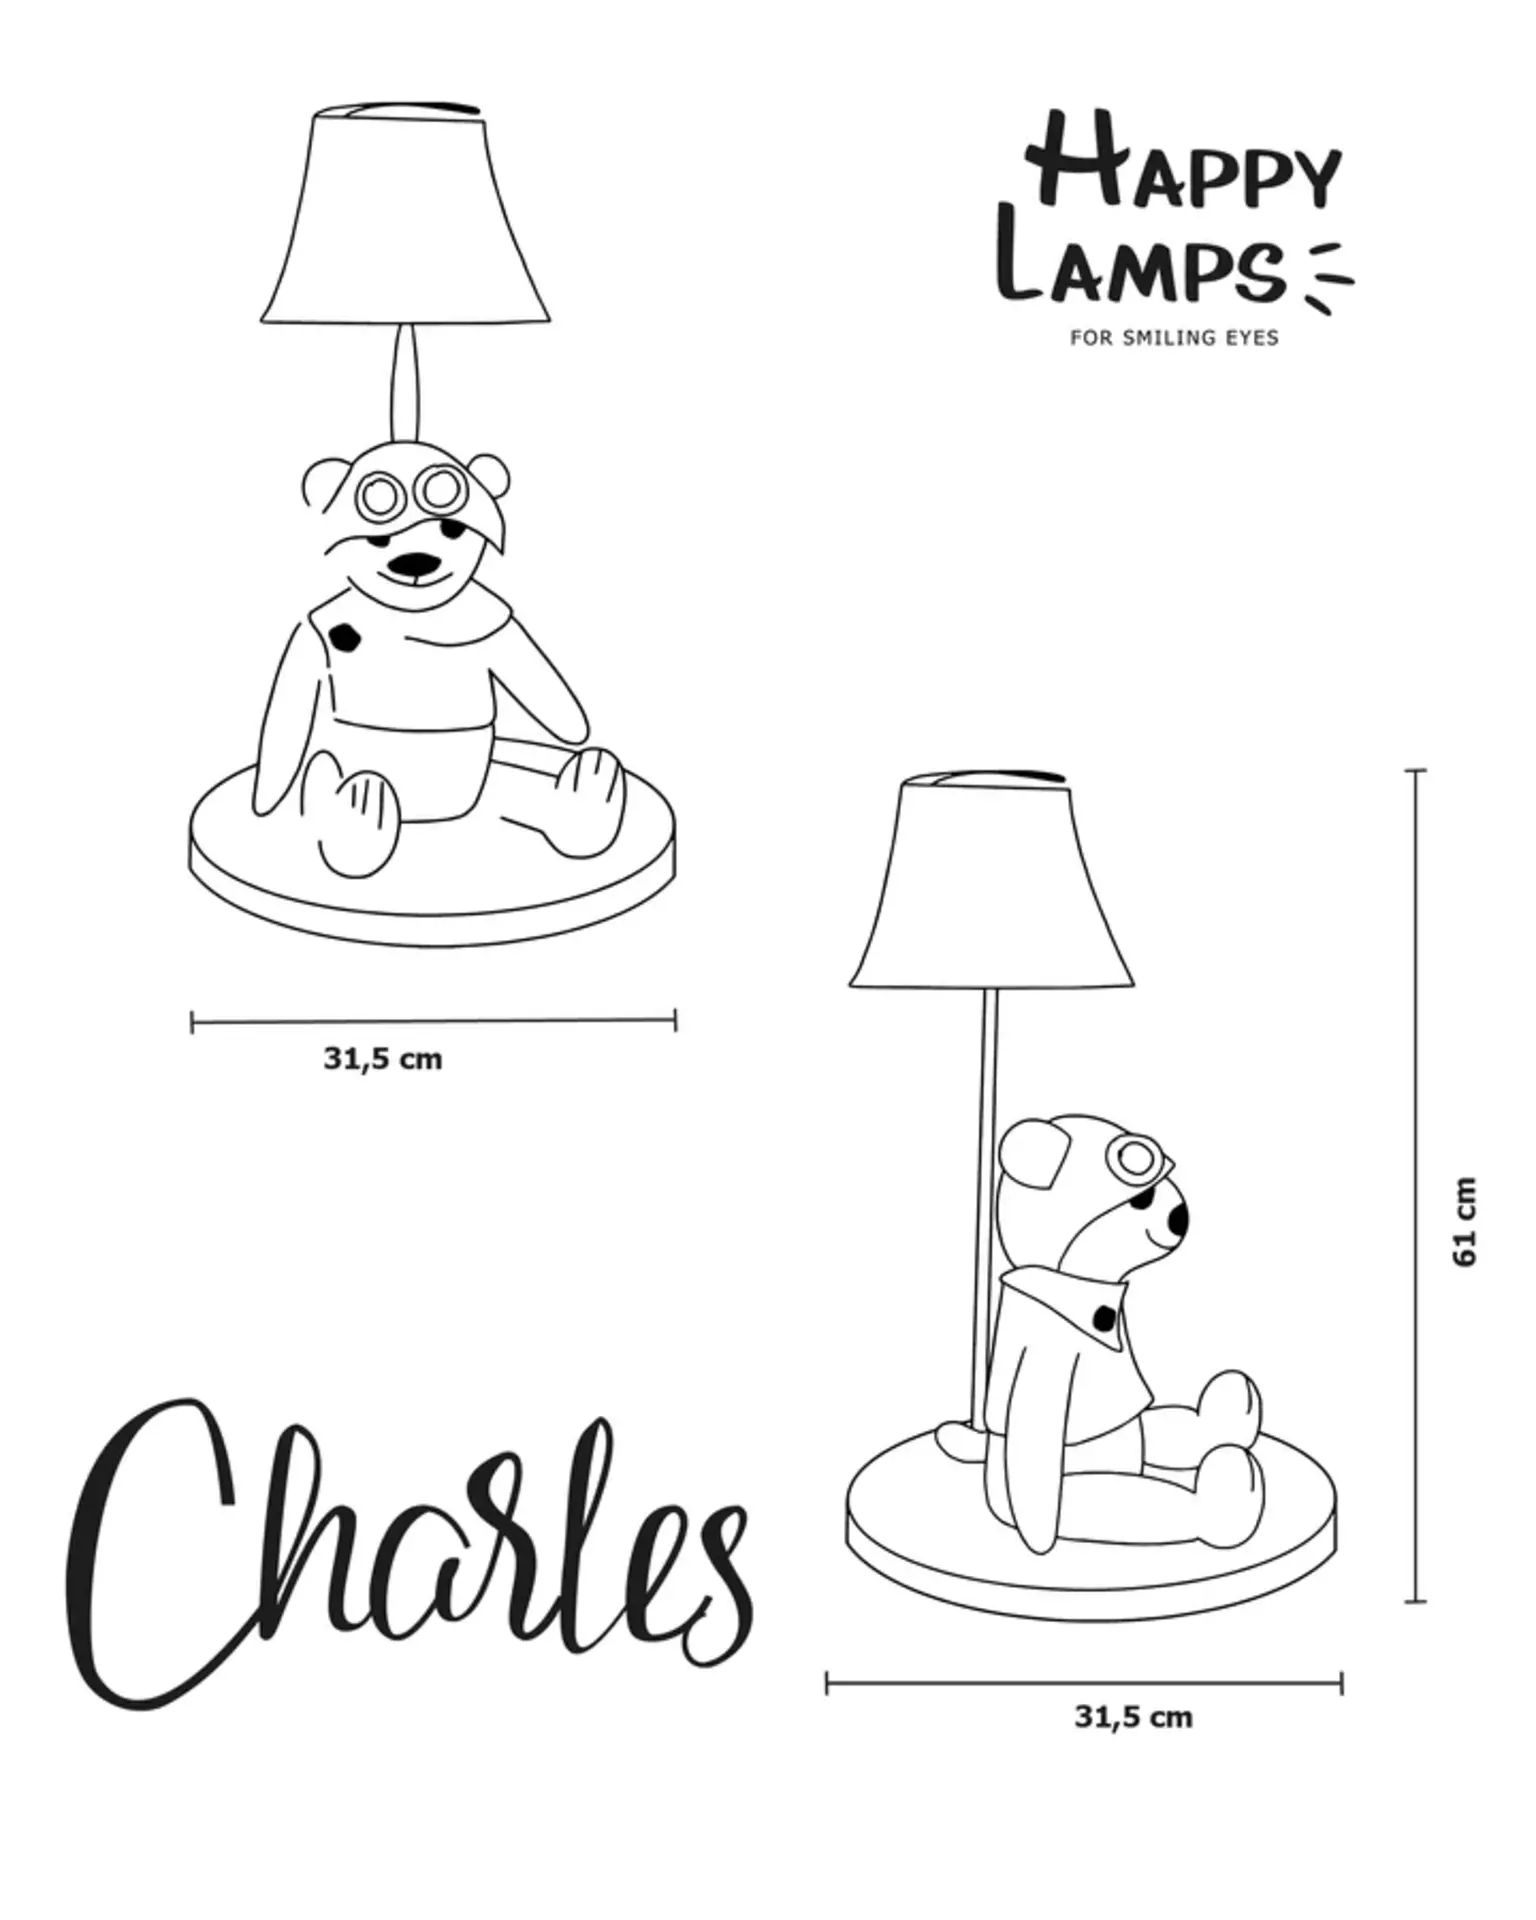 Tischleuchte CHARLES Happy Lamps Textil 31 x 61 x 31 cm